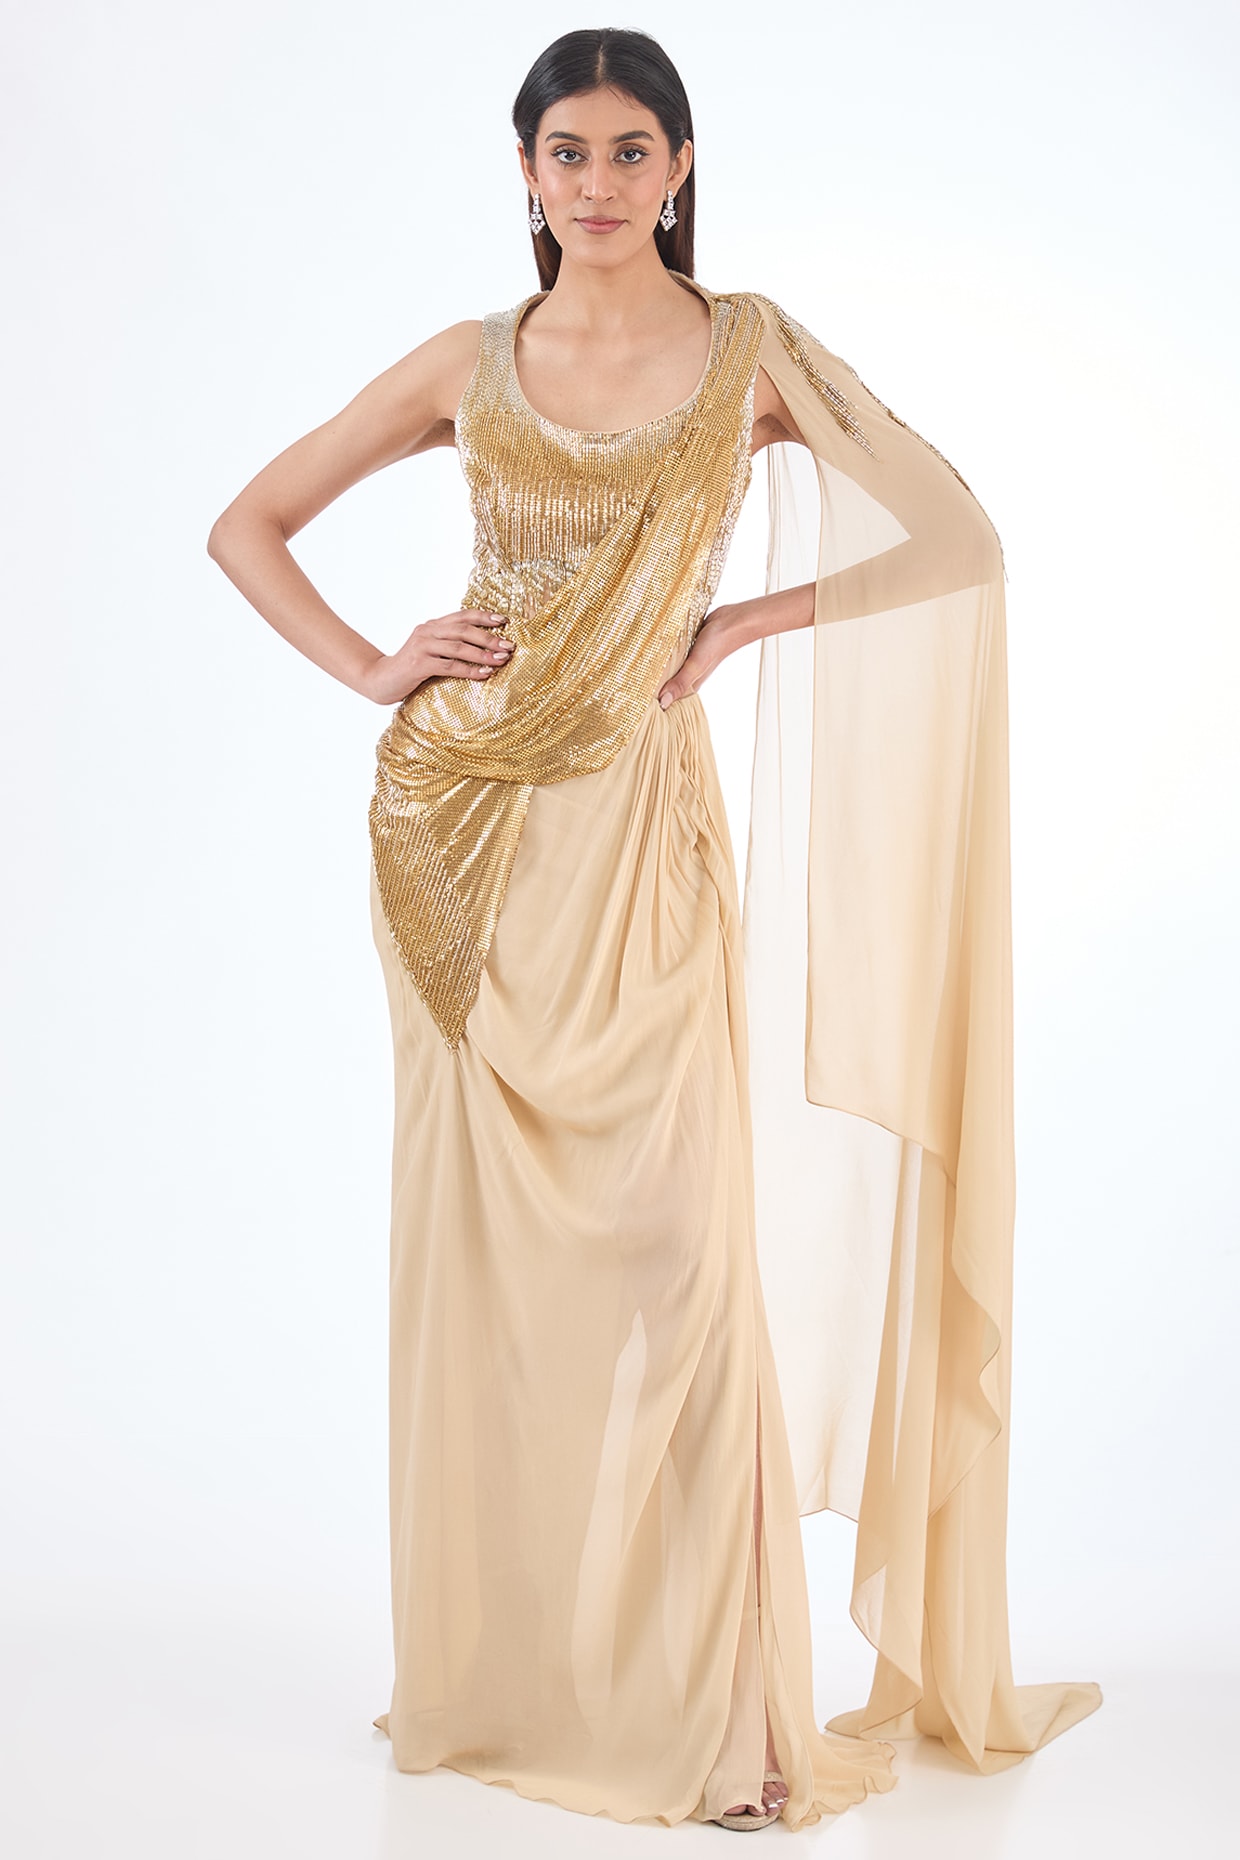 Drape Saree Like A Dress With This Easy Tutorial | Saree wearing styles,  Saree draping styles, Dress